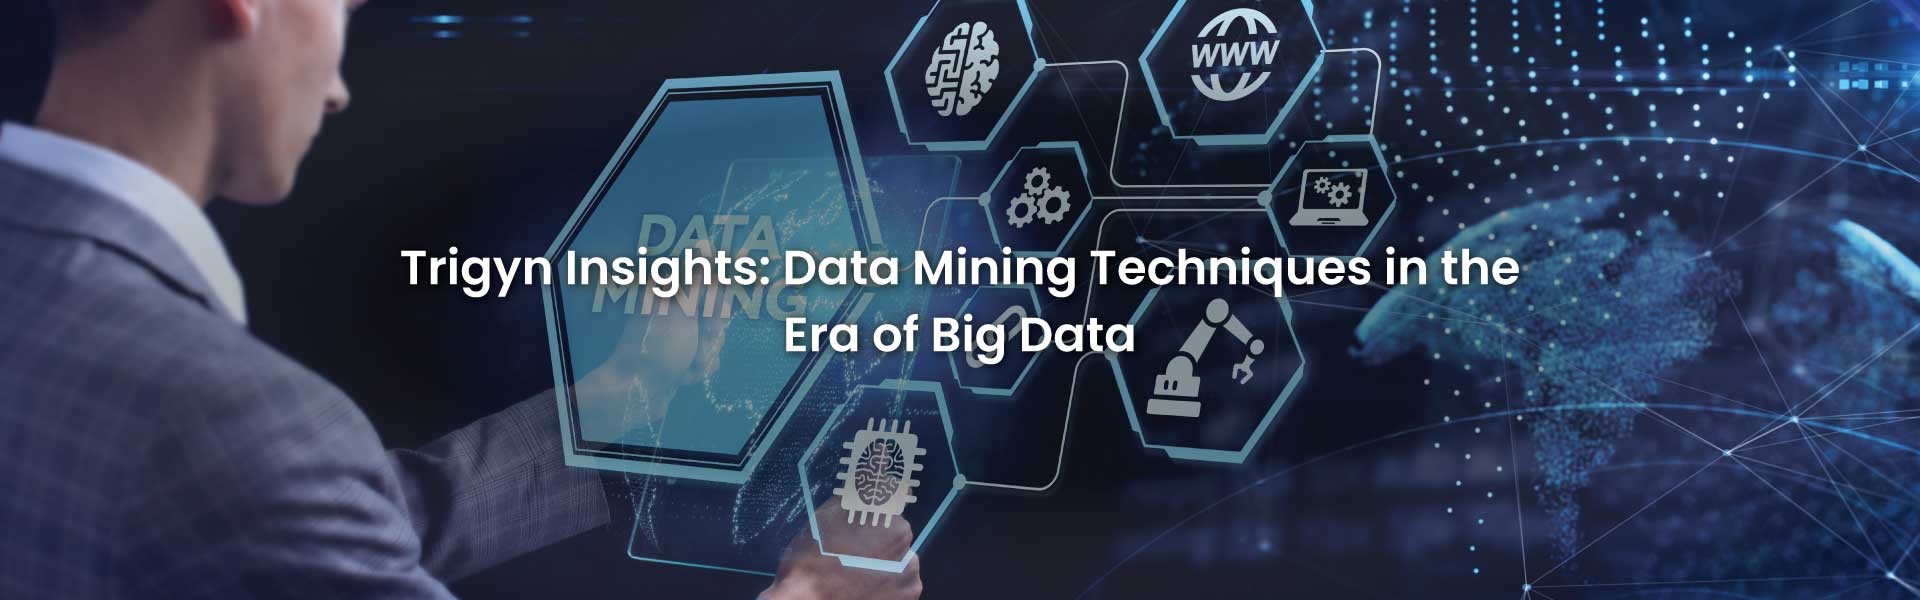 Data Mining in the Era of Big Data 